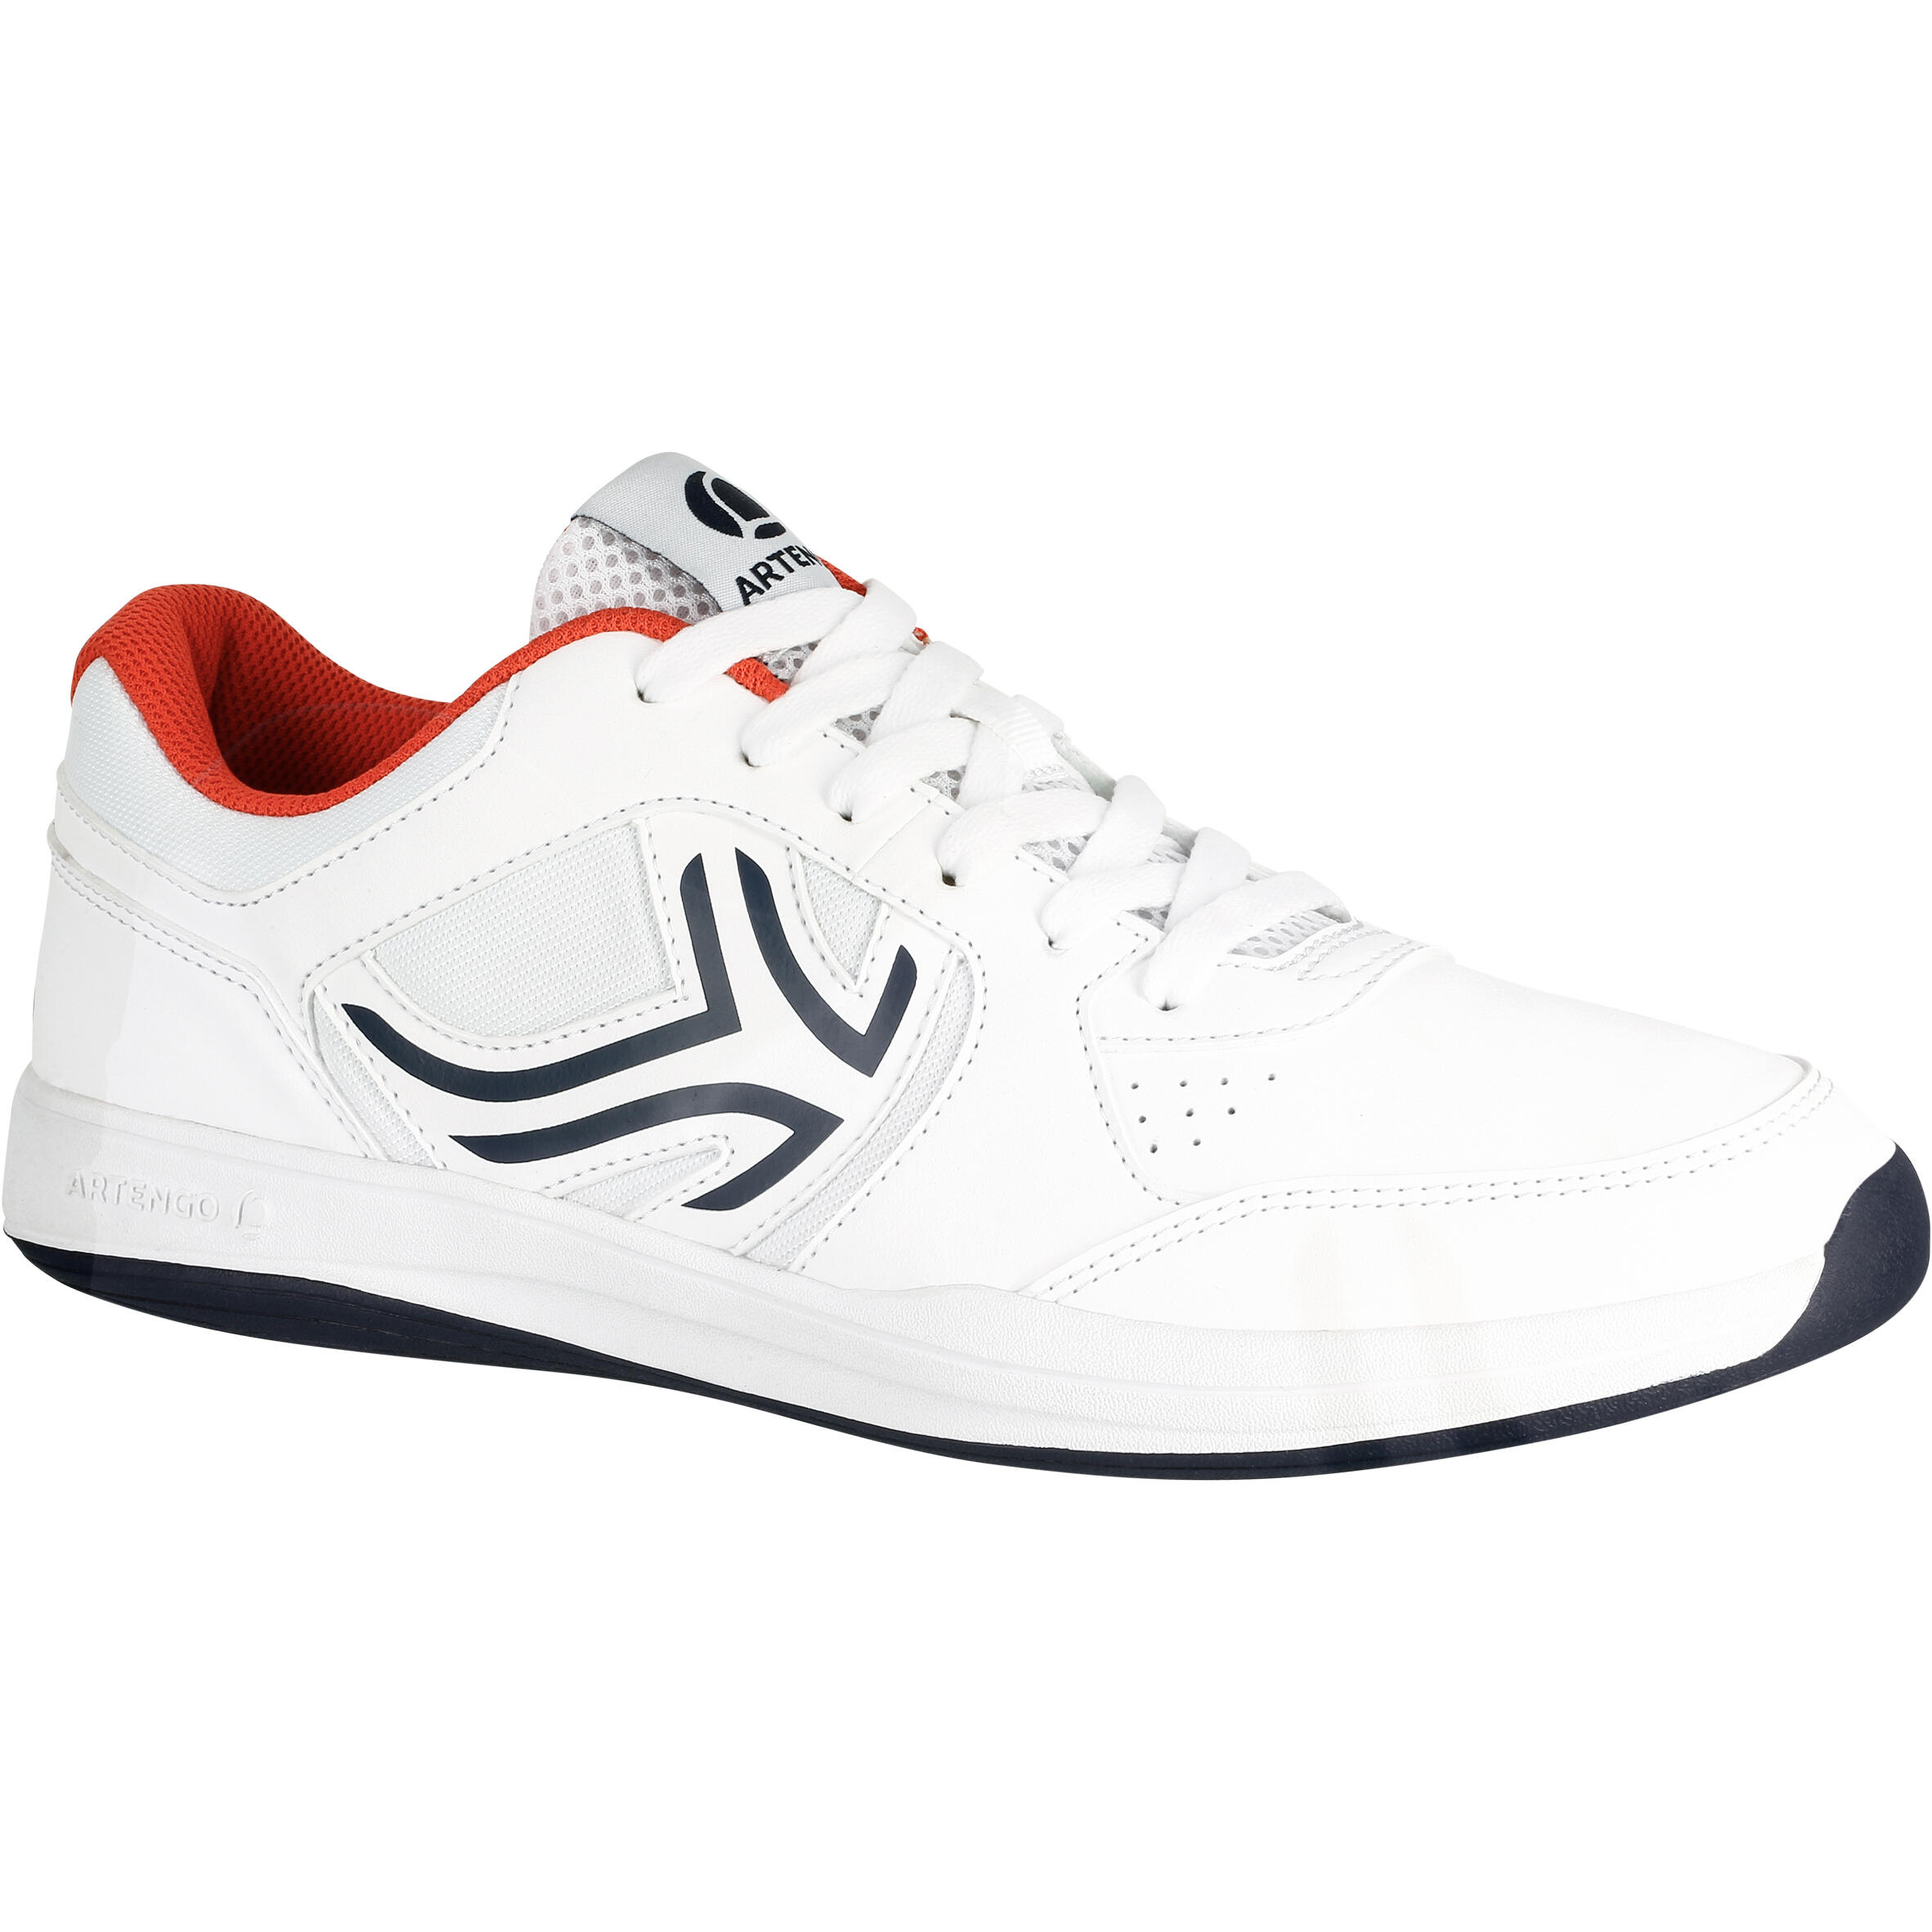 TS130 Multicourt Tennis Shoes ARTENGO 